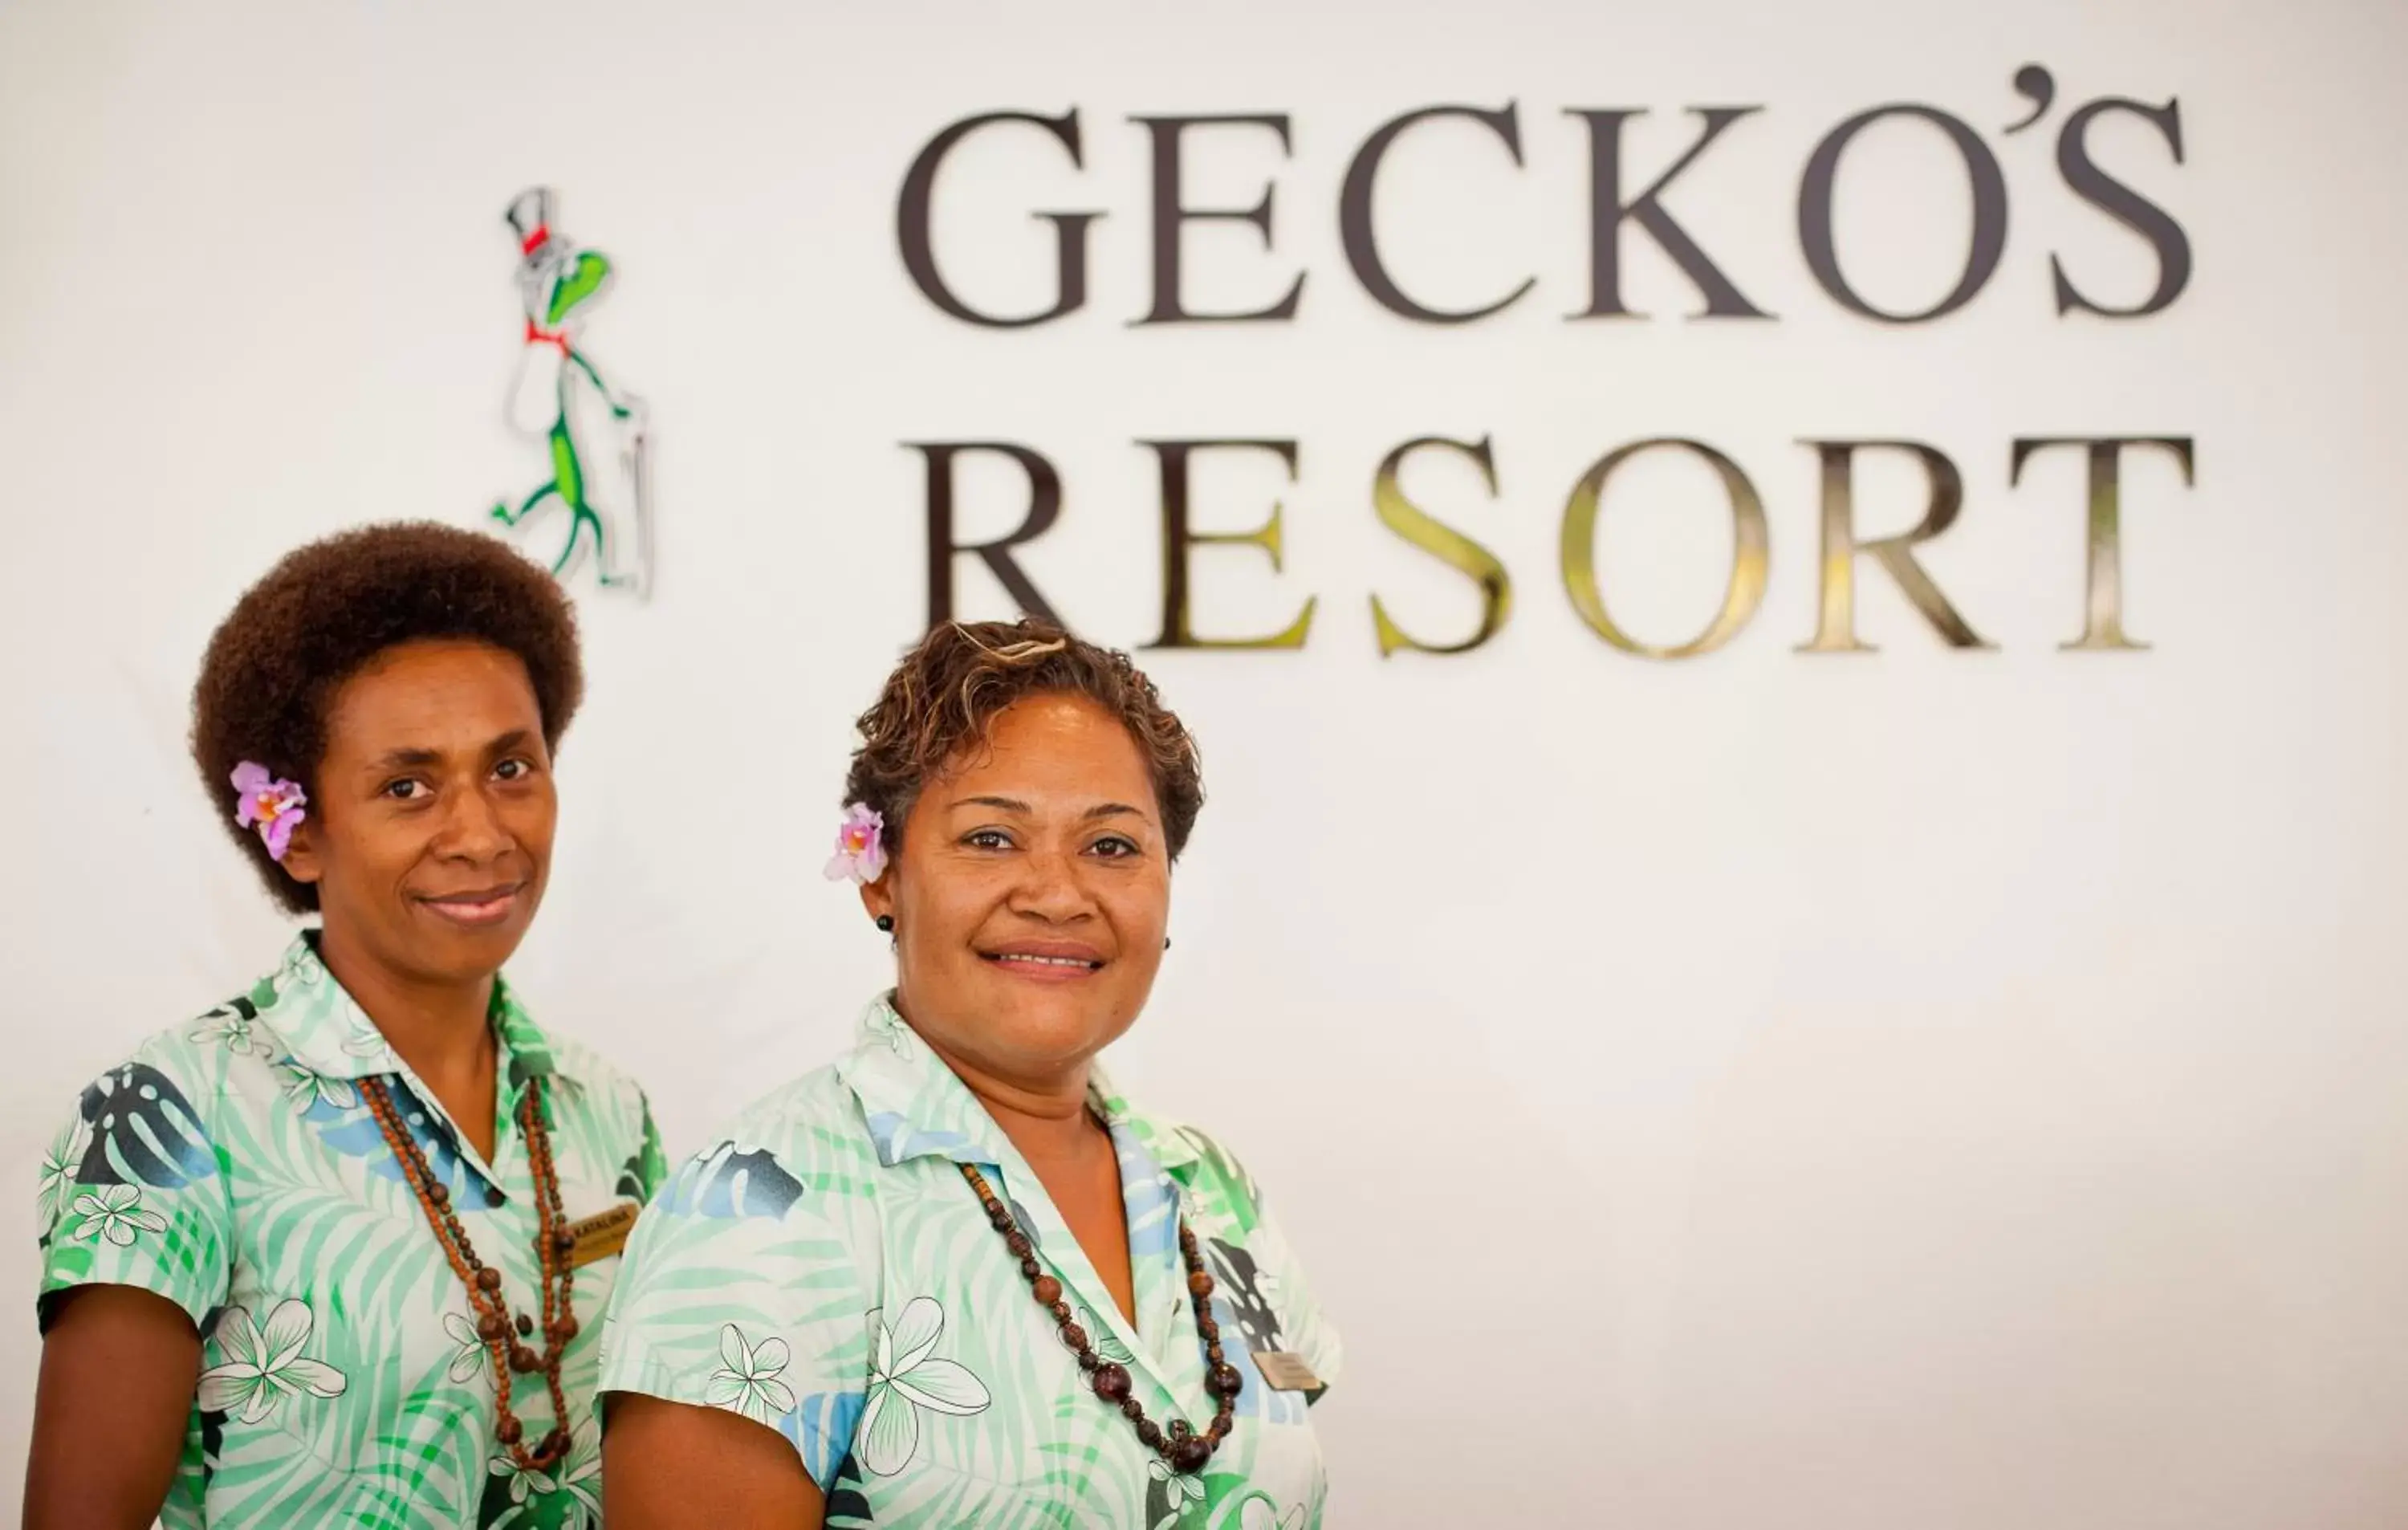 People in Gecko's Resort